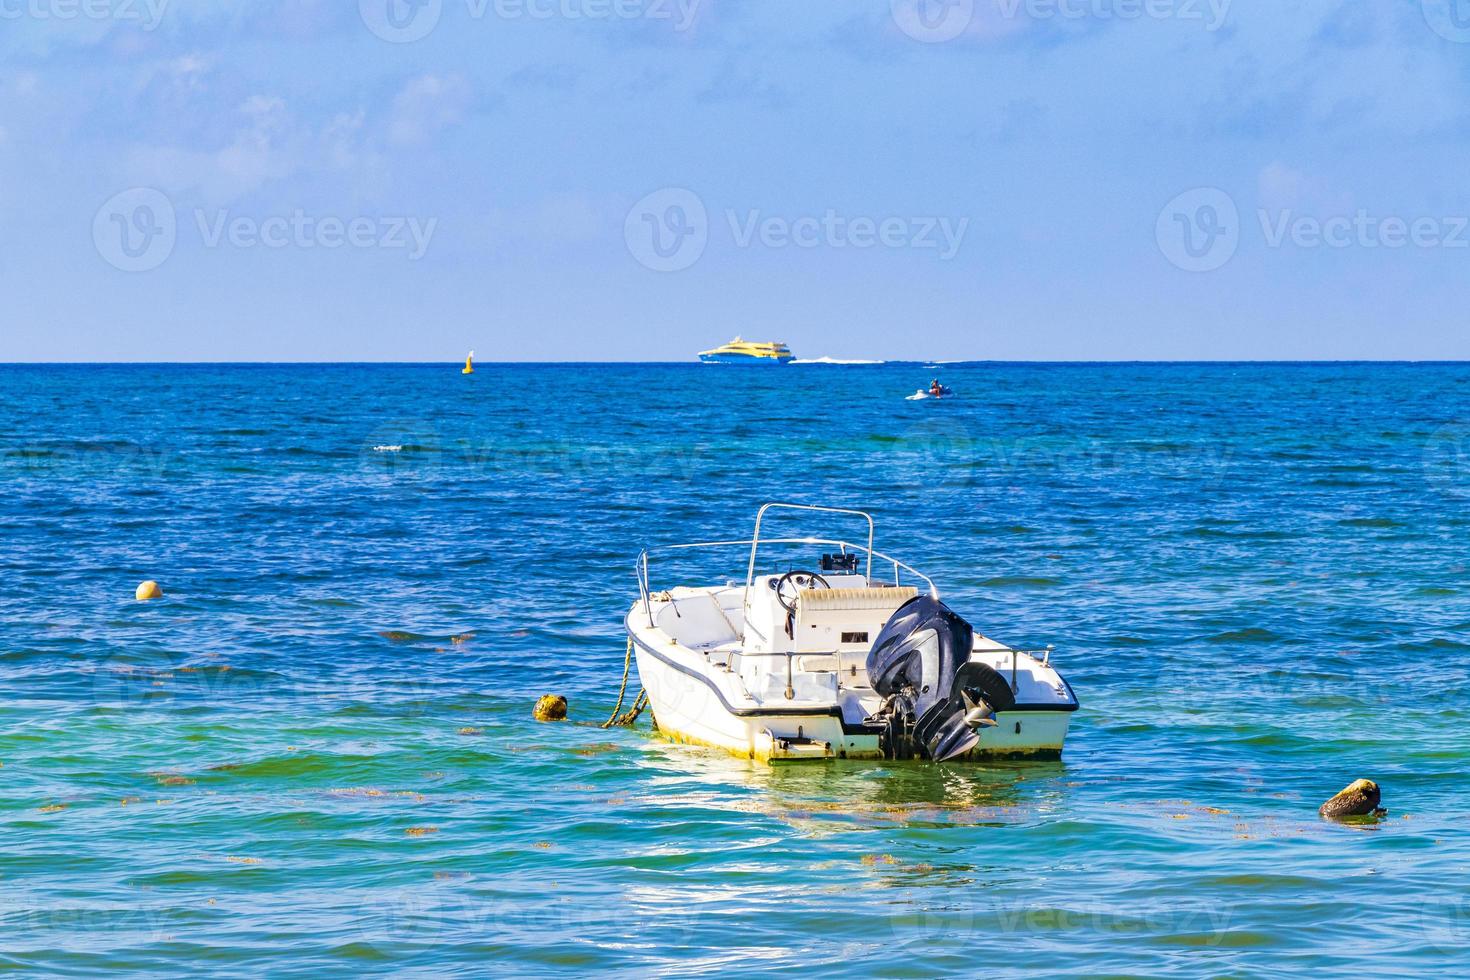 barcos iates na praia tropical mexicana playa del carmen méxico. foto